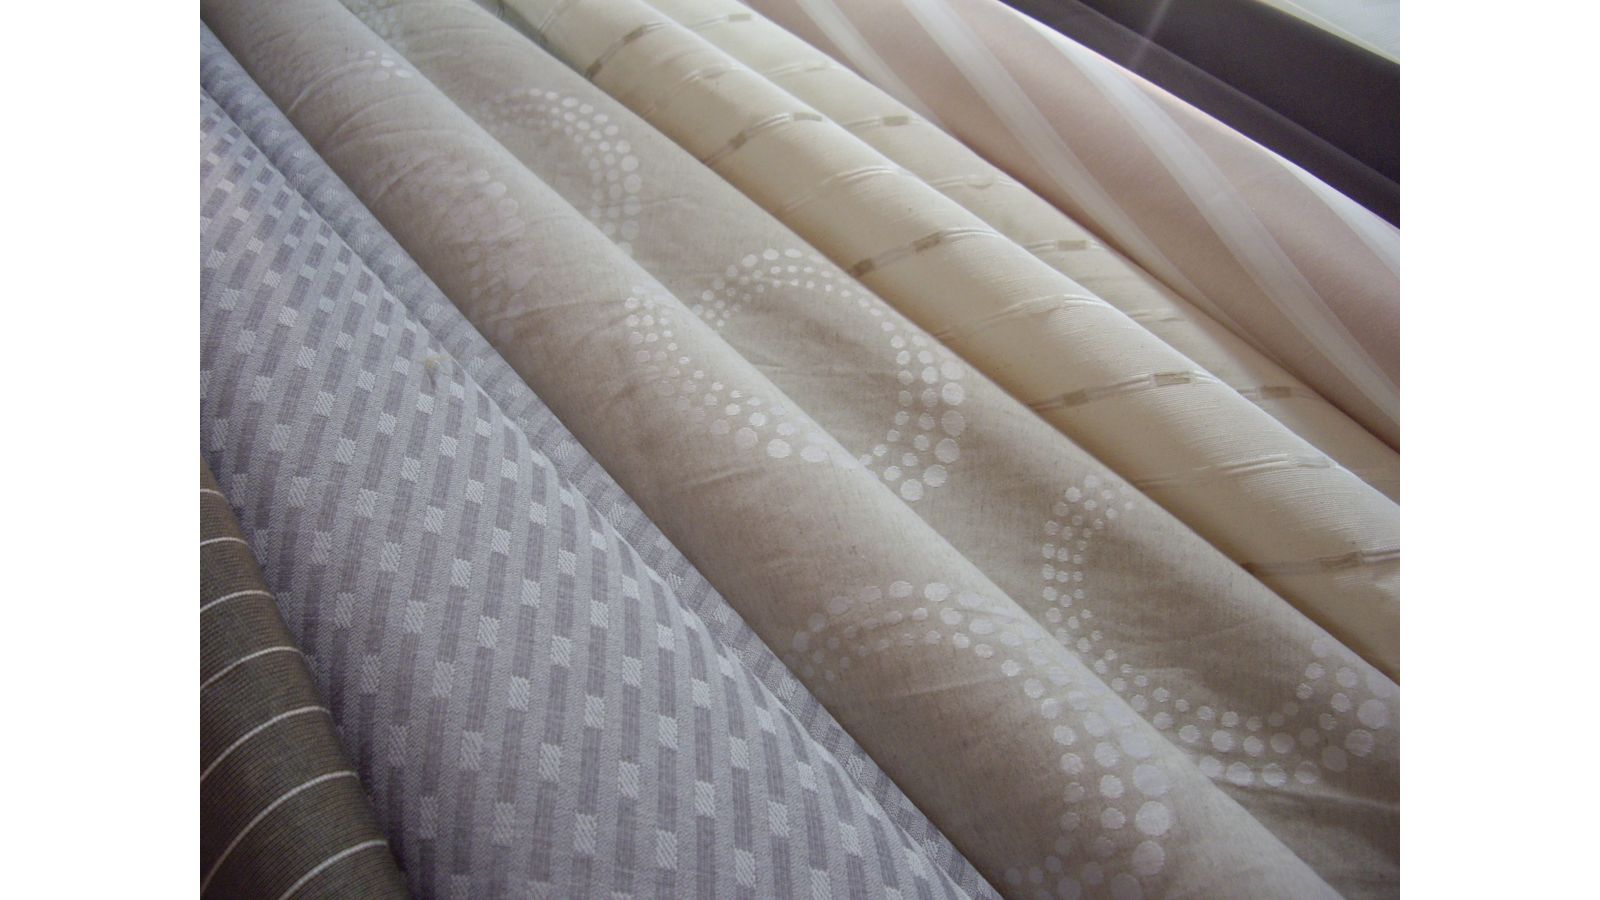 Jacquard, Upholstery, Drapery and Sheer Fabrics